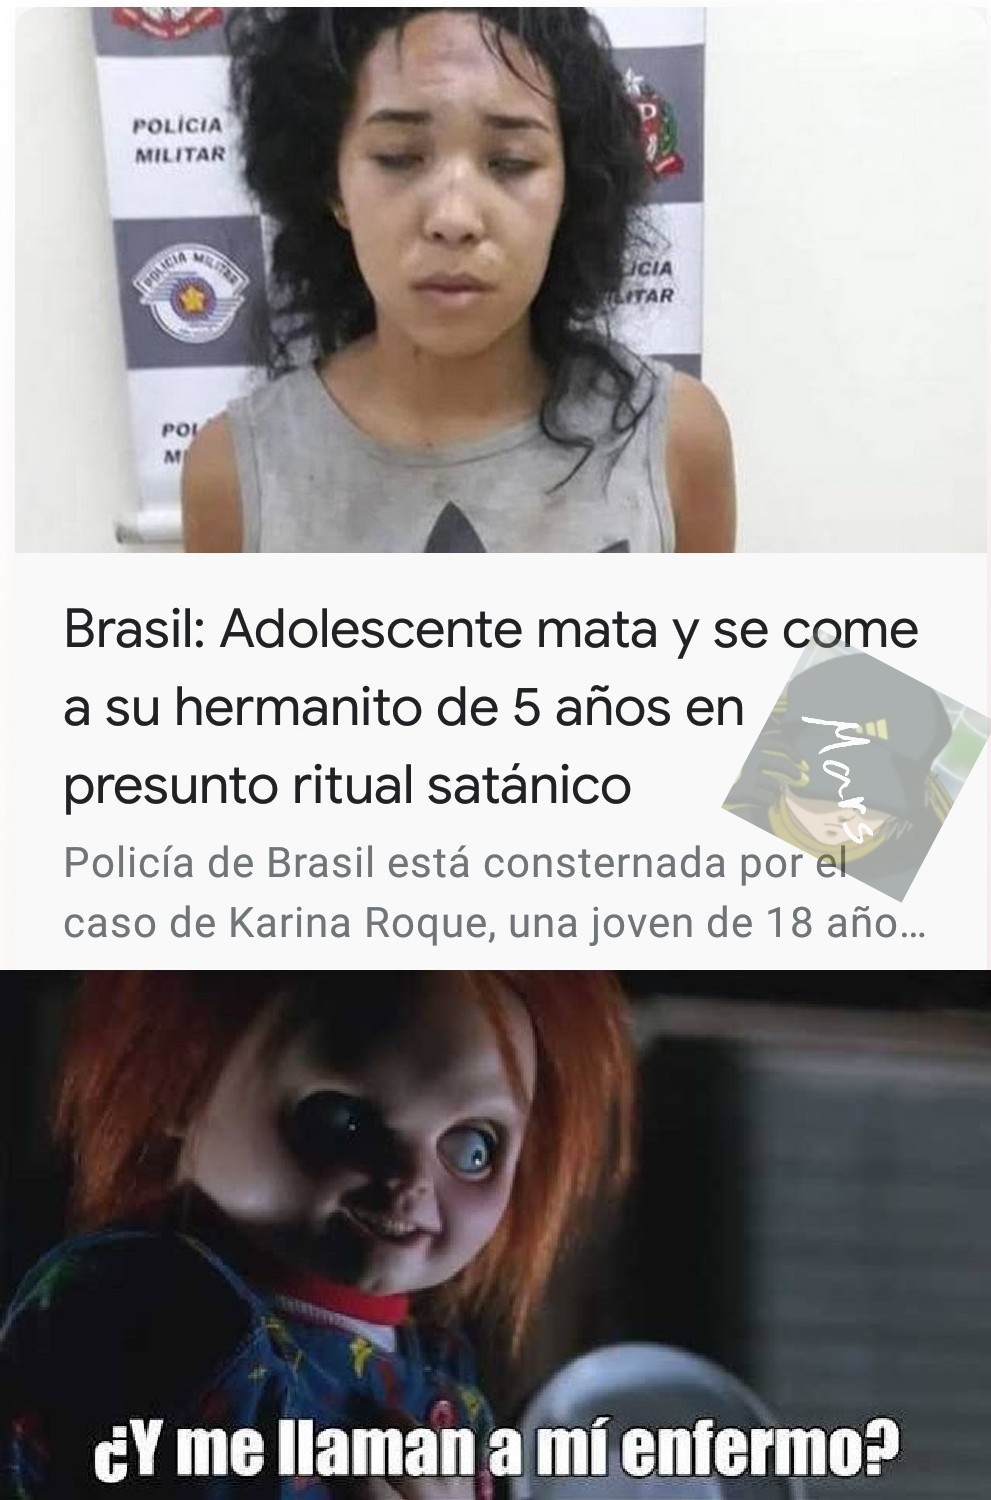 En Brazil ummmm - meme